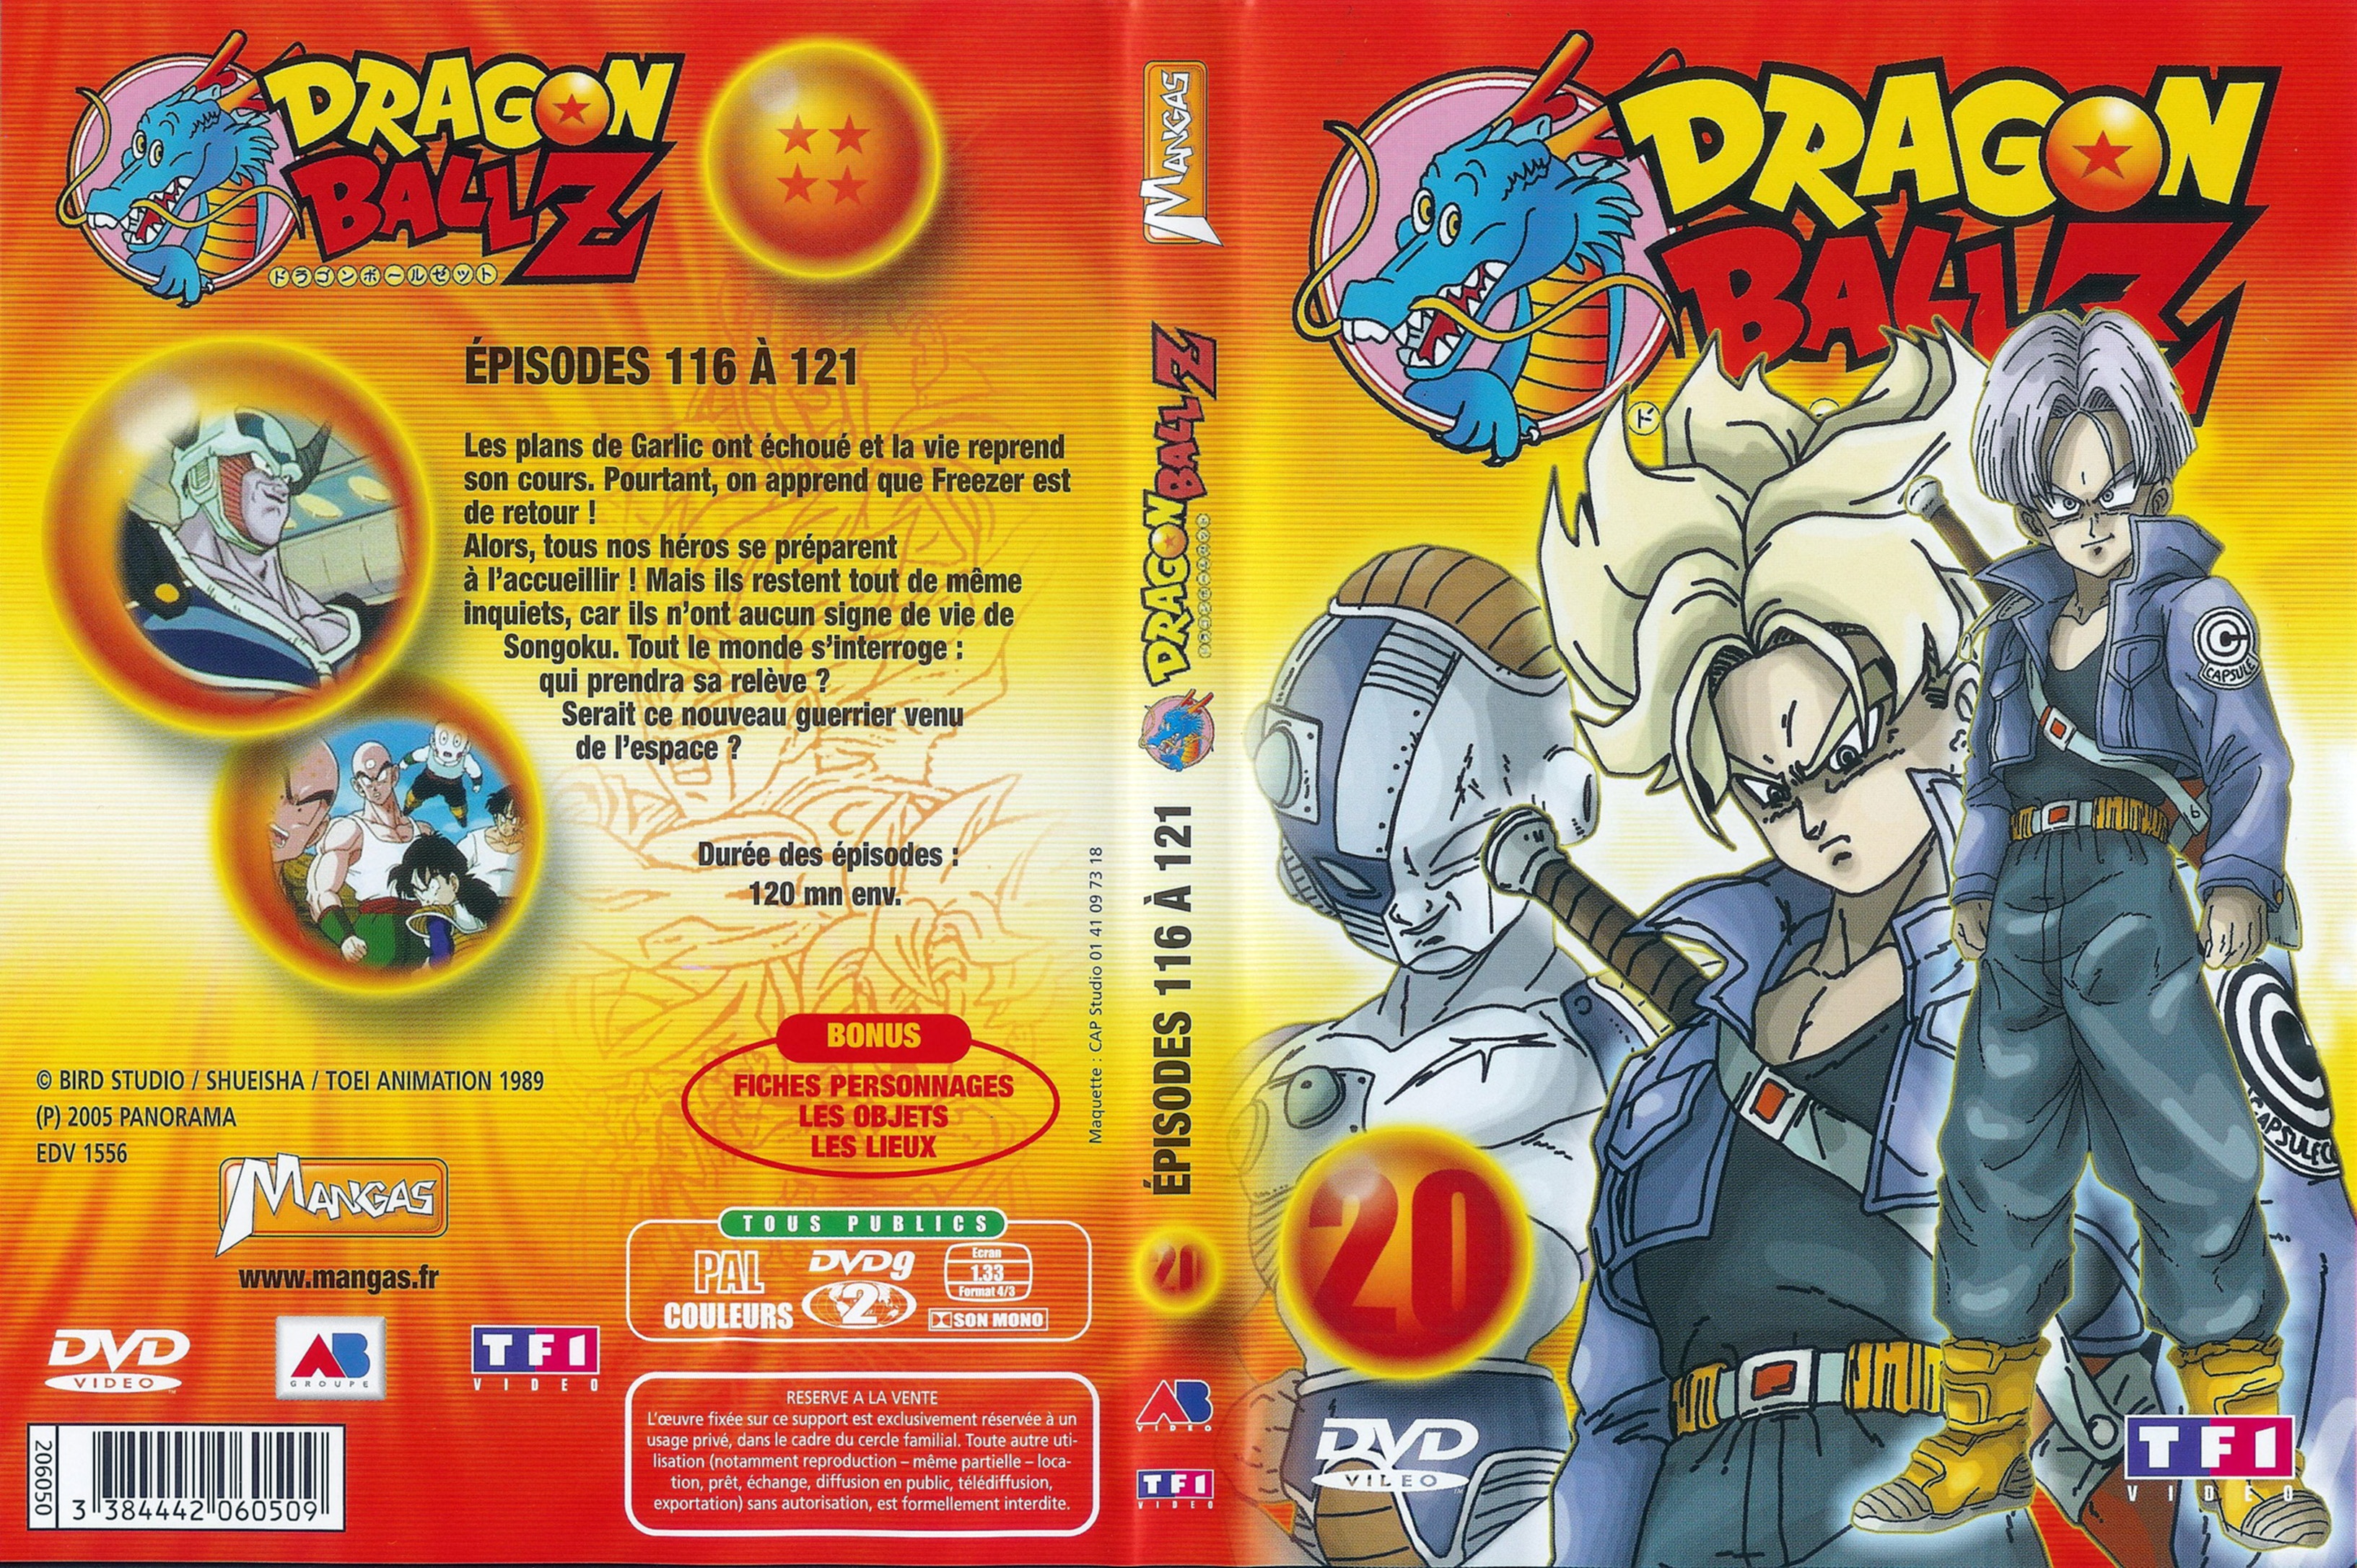 Jaquette DVD Dragon ball Z vol 20